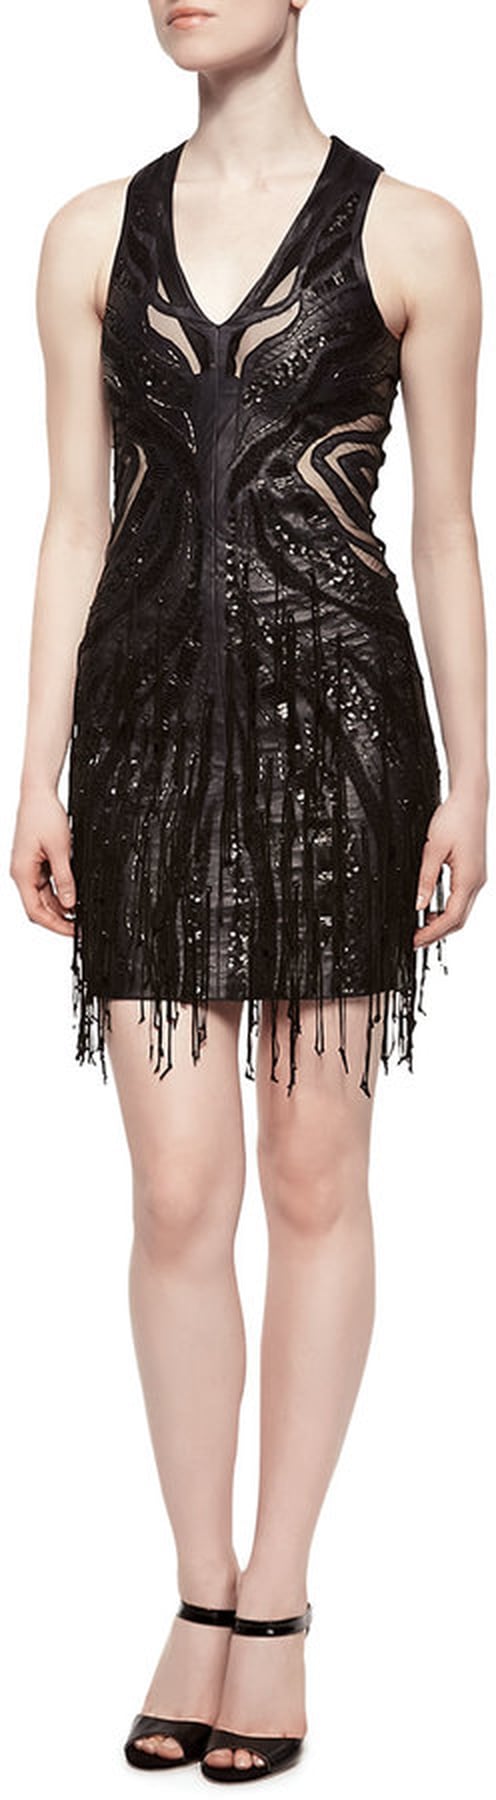 Kate Beckinsale Wearing a Black Cutout Dress | POPSUGAR Fashion